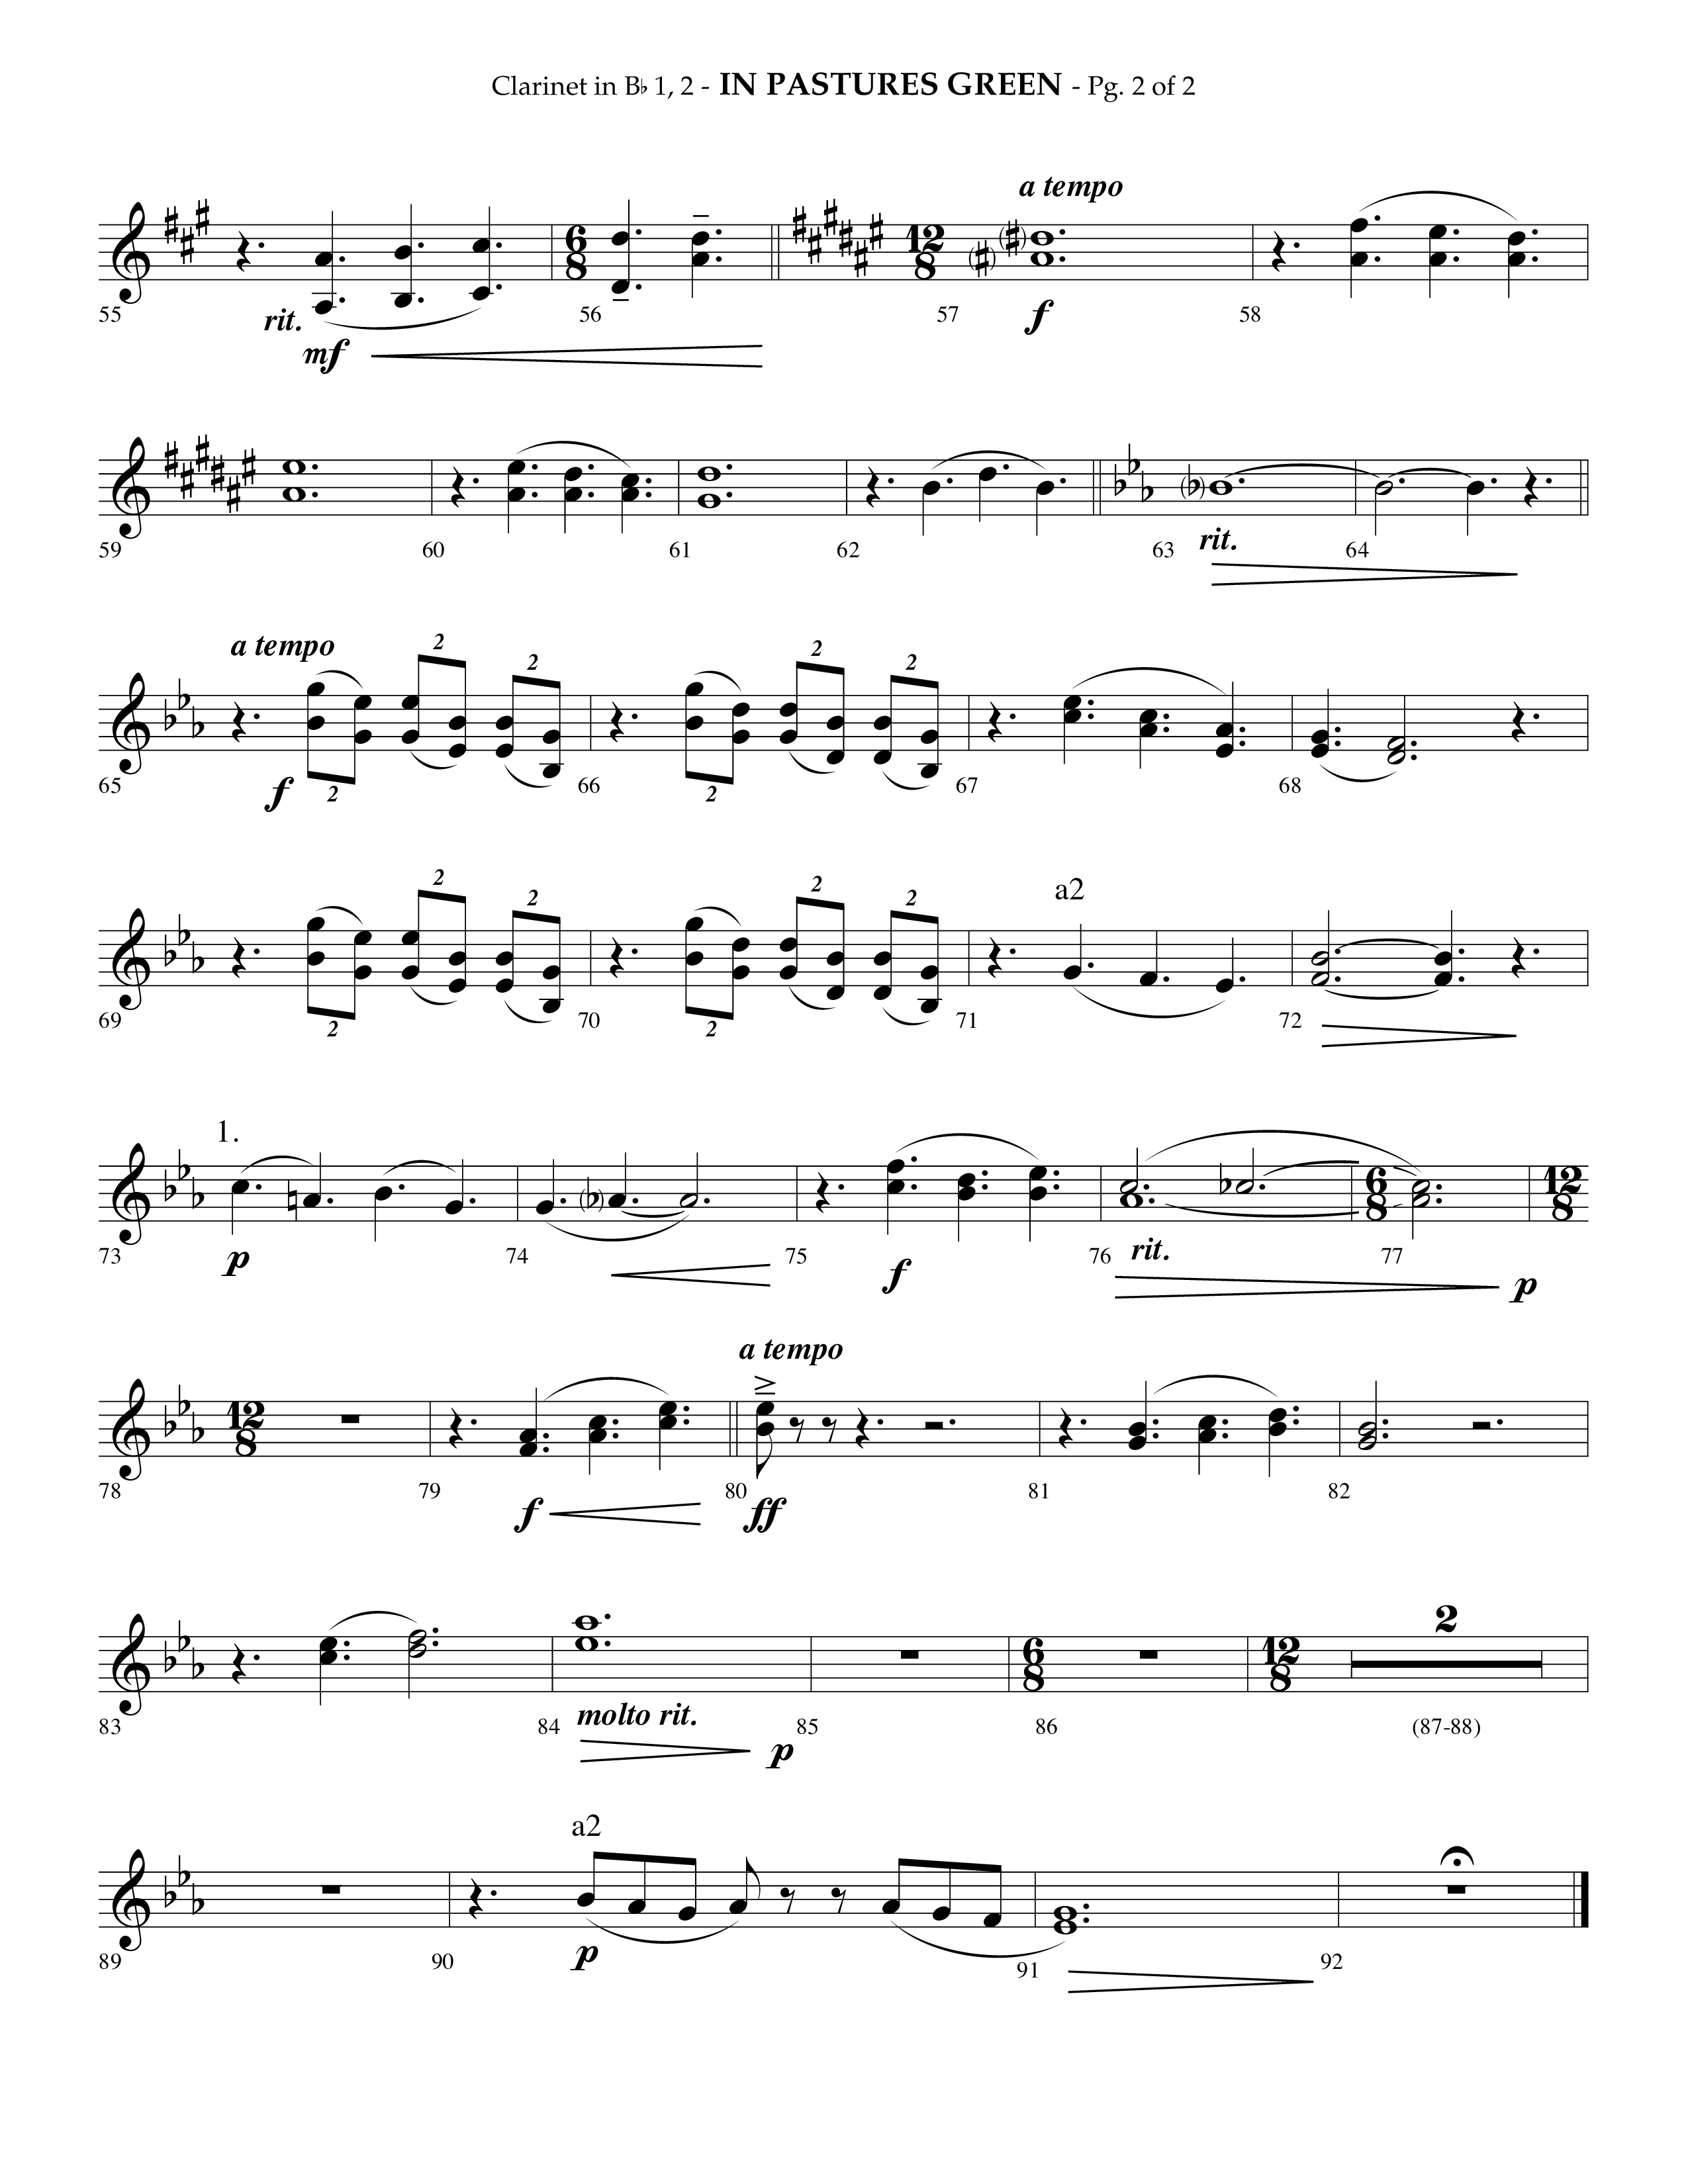 In Pastures Green (Choral Anthem SATB) Clarinet 1/2 (Lifeway Choral / Arr. Phillip Keveren)